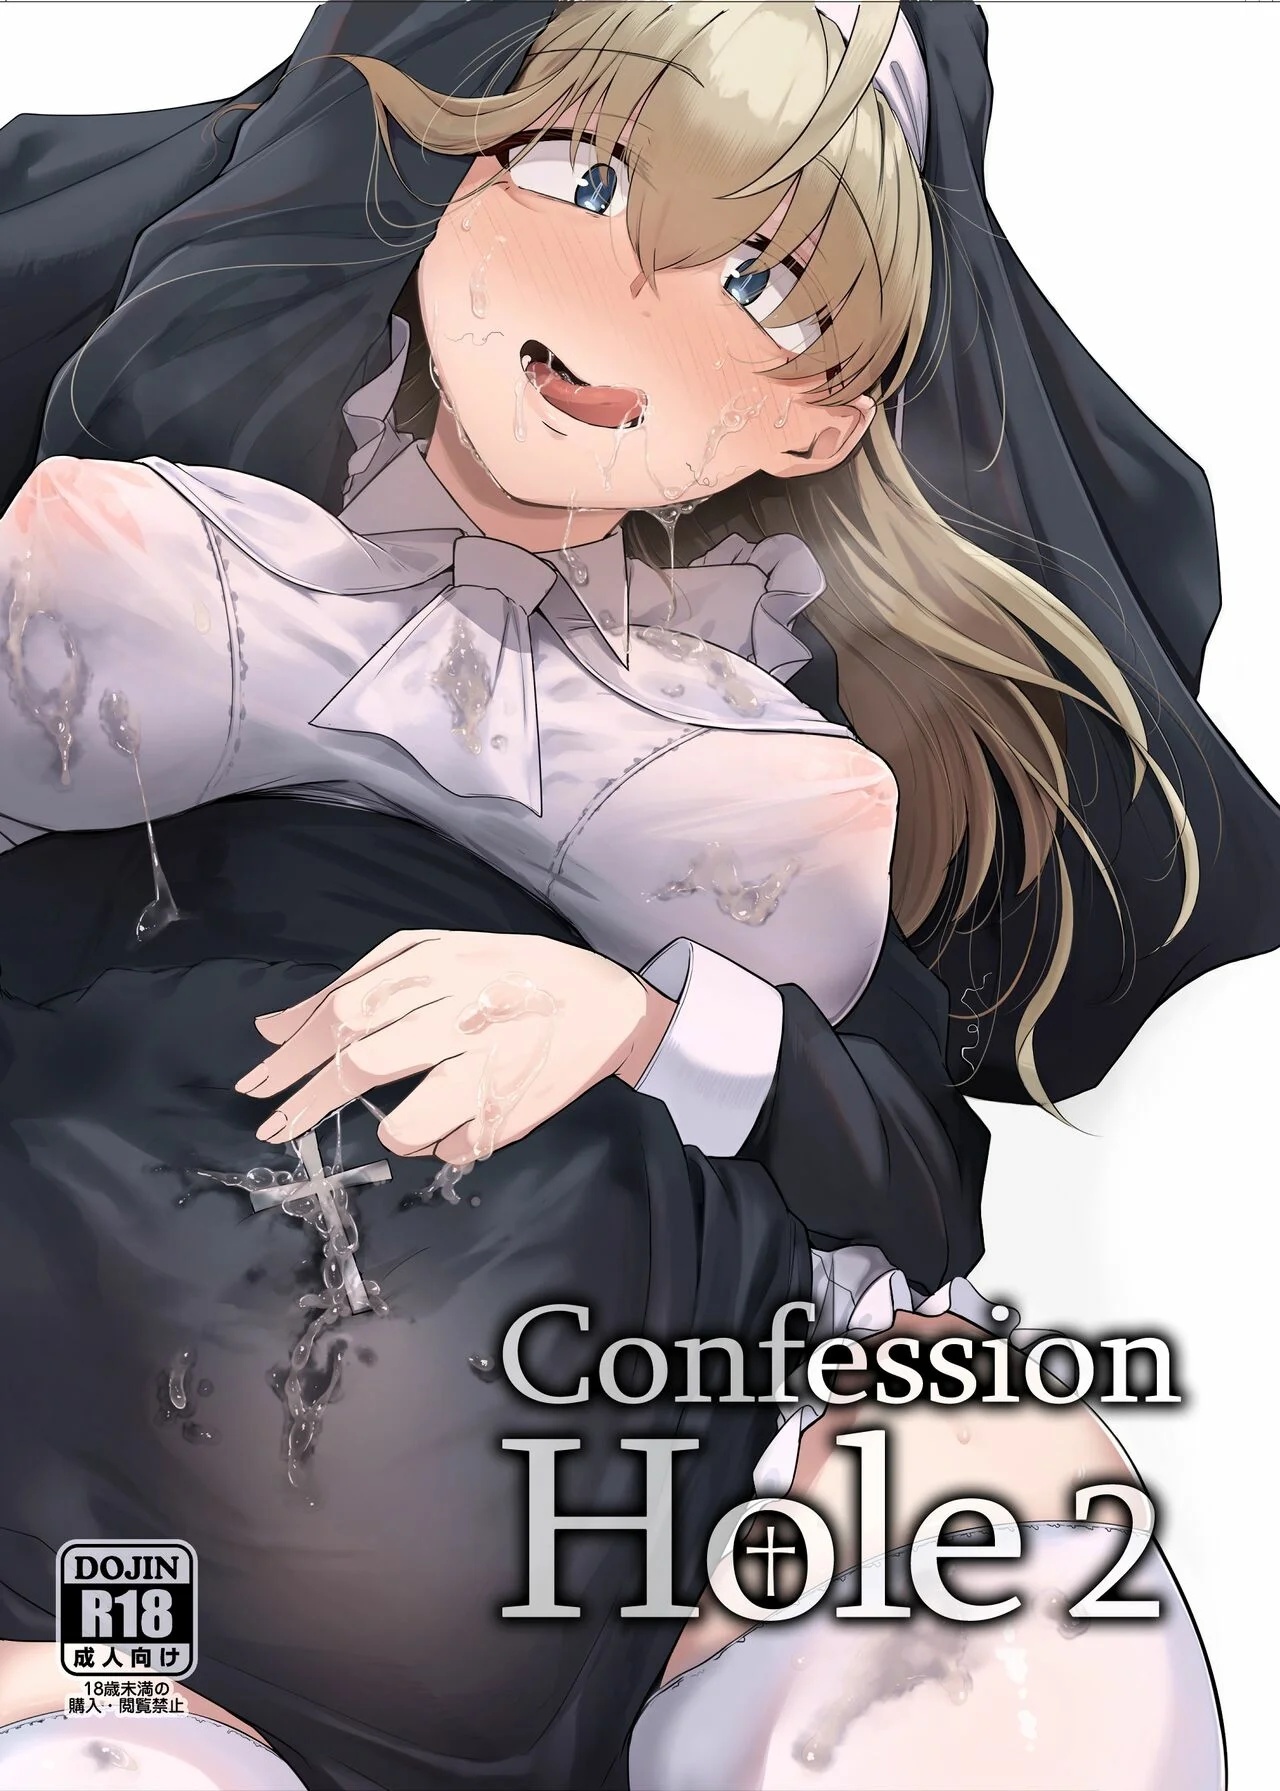 Zange Ana 2 Confession Hole 2 - 0